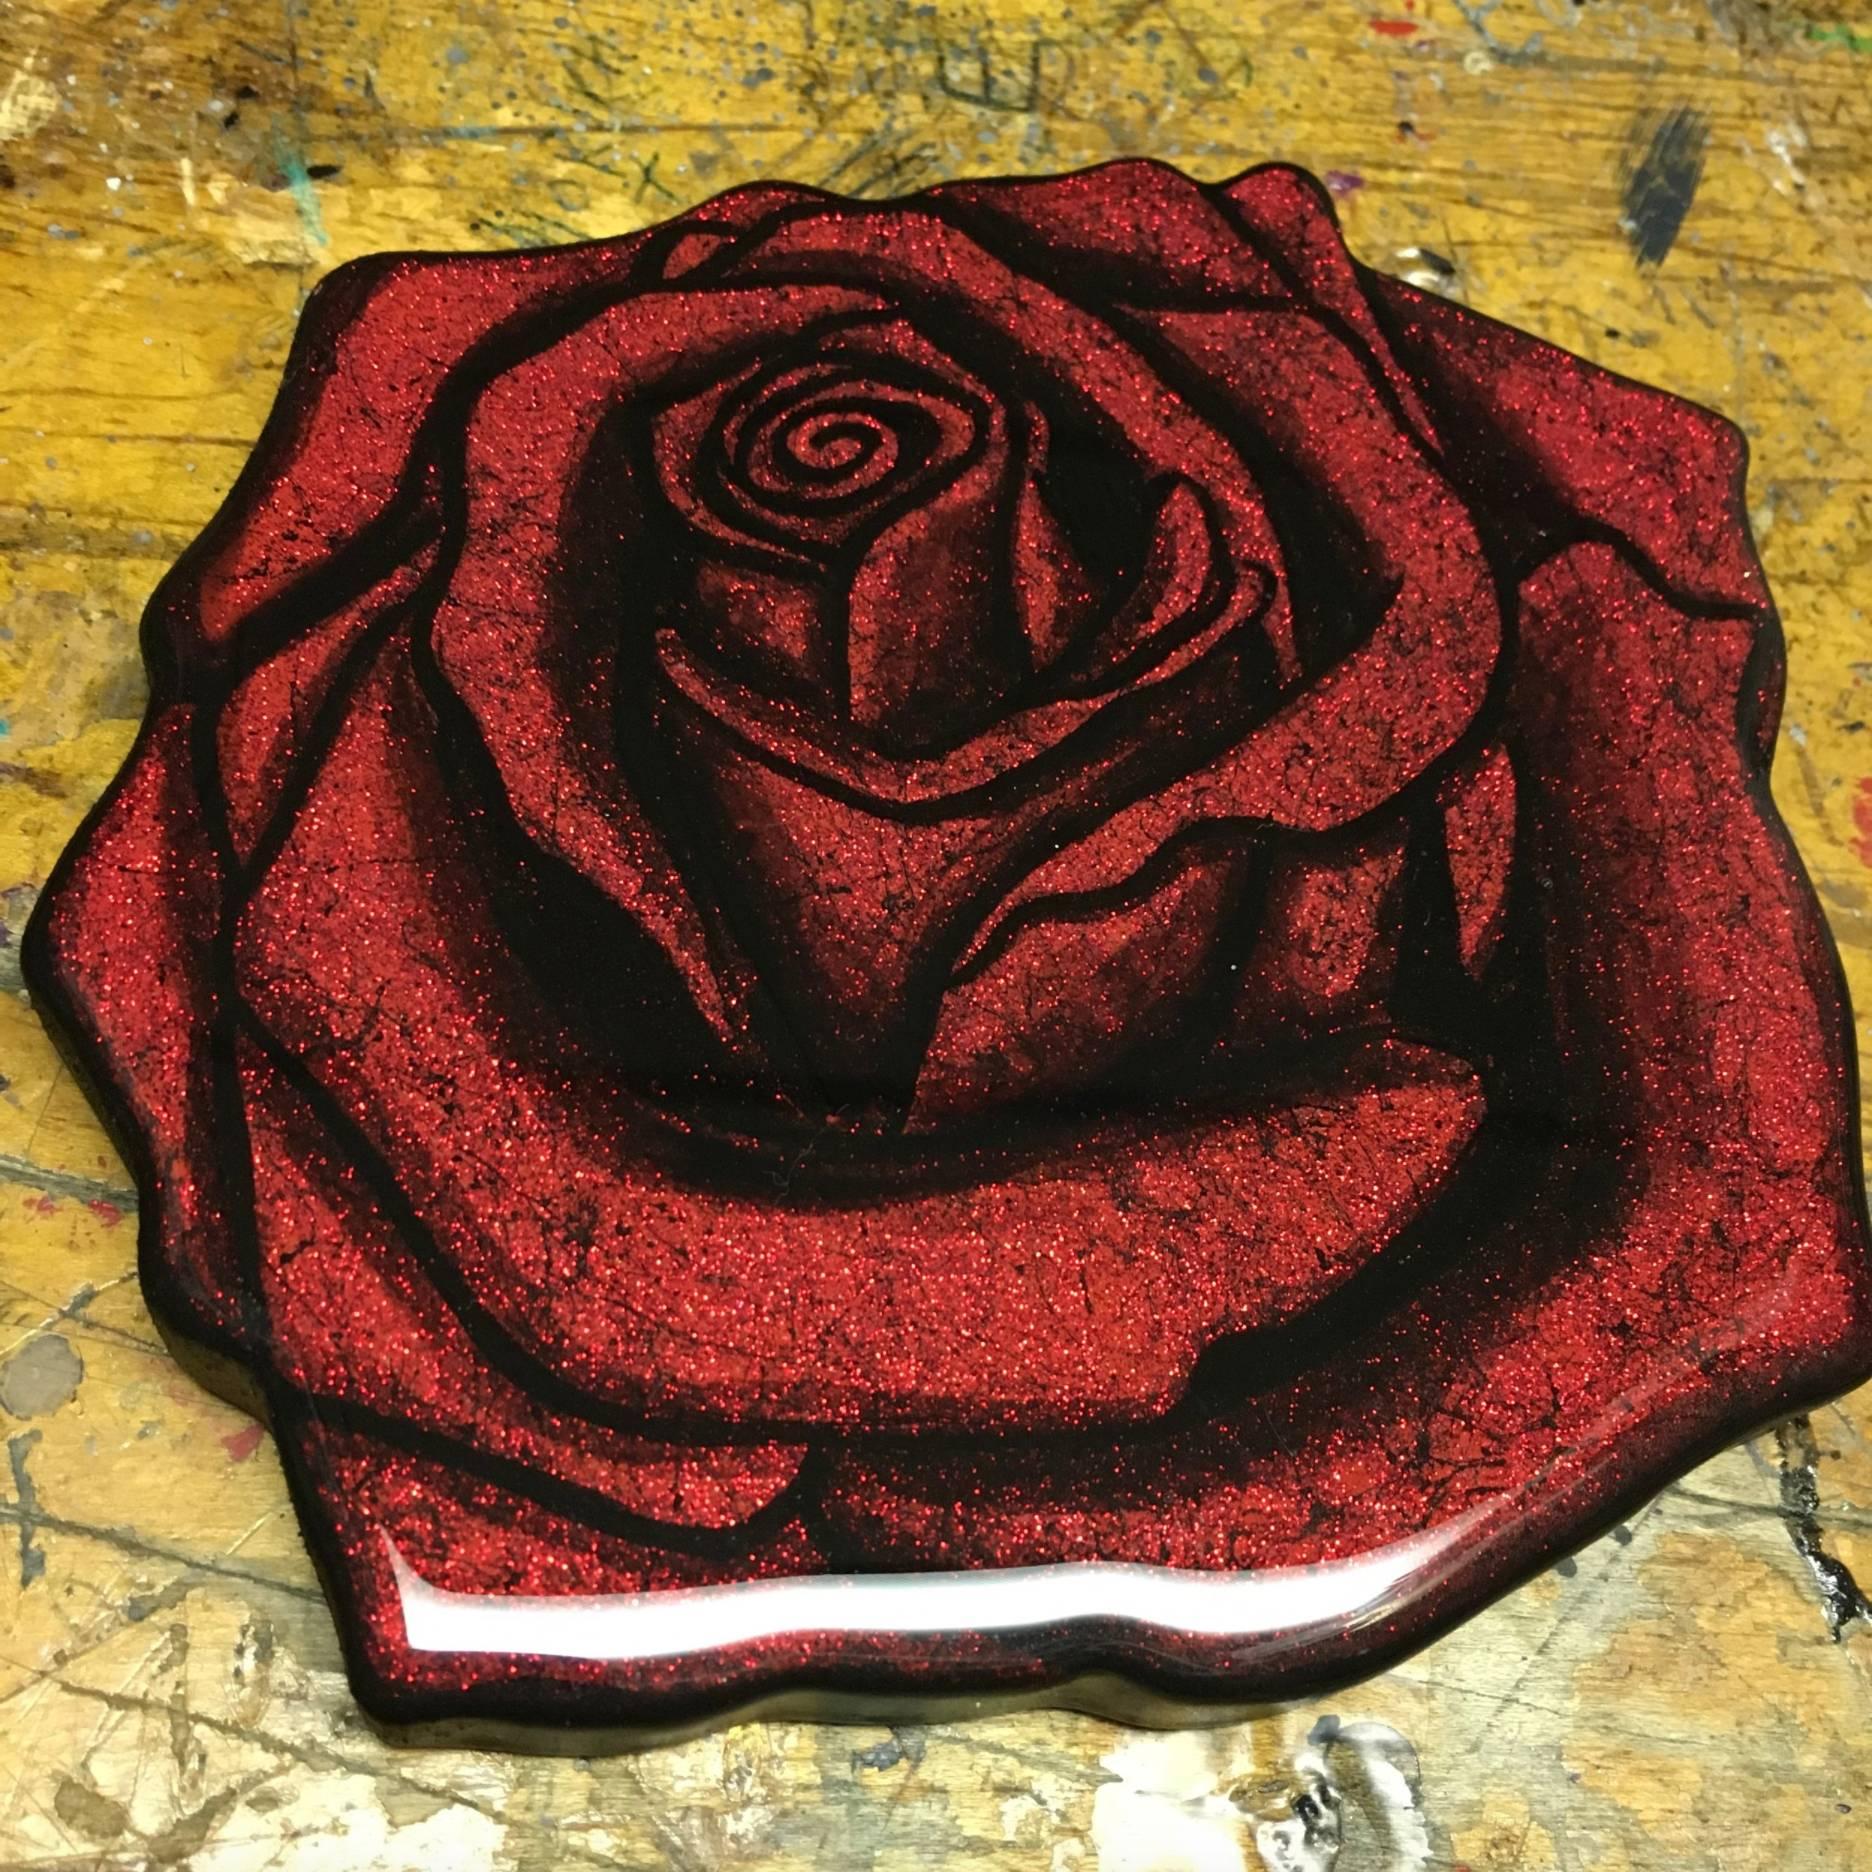 Red Rose - Street Art Mixed Media Art by Jenna Morello